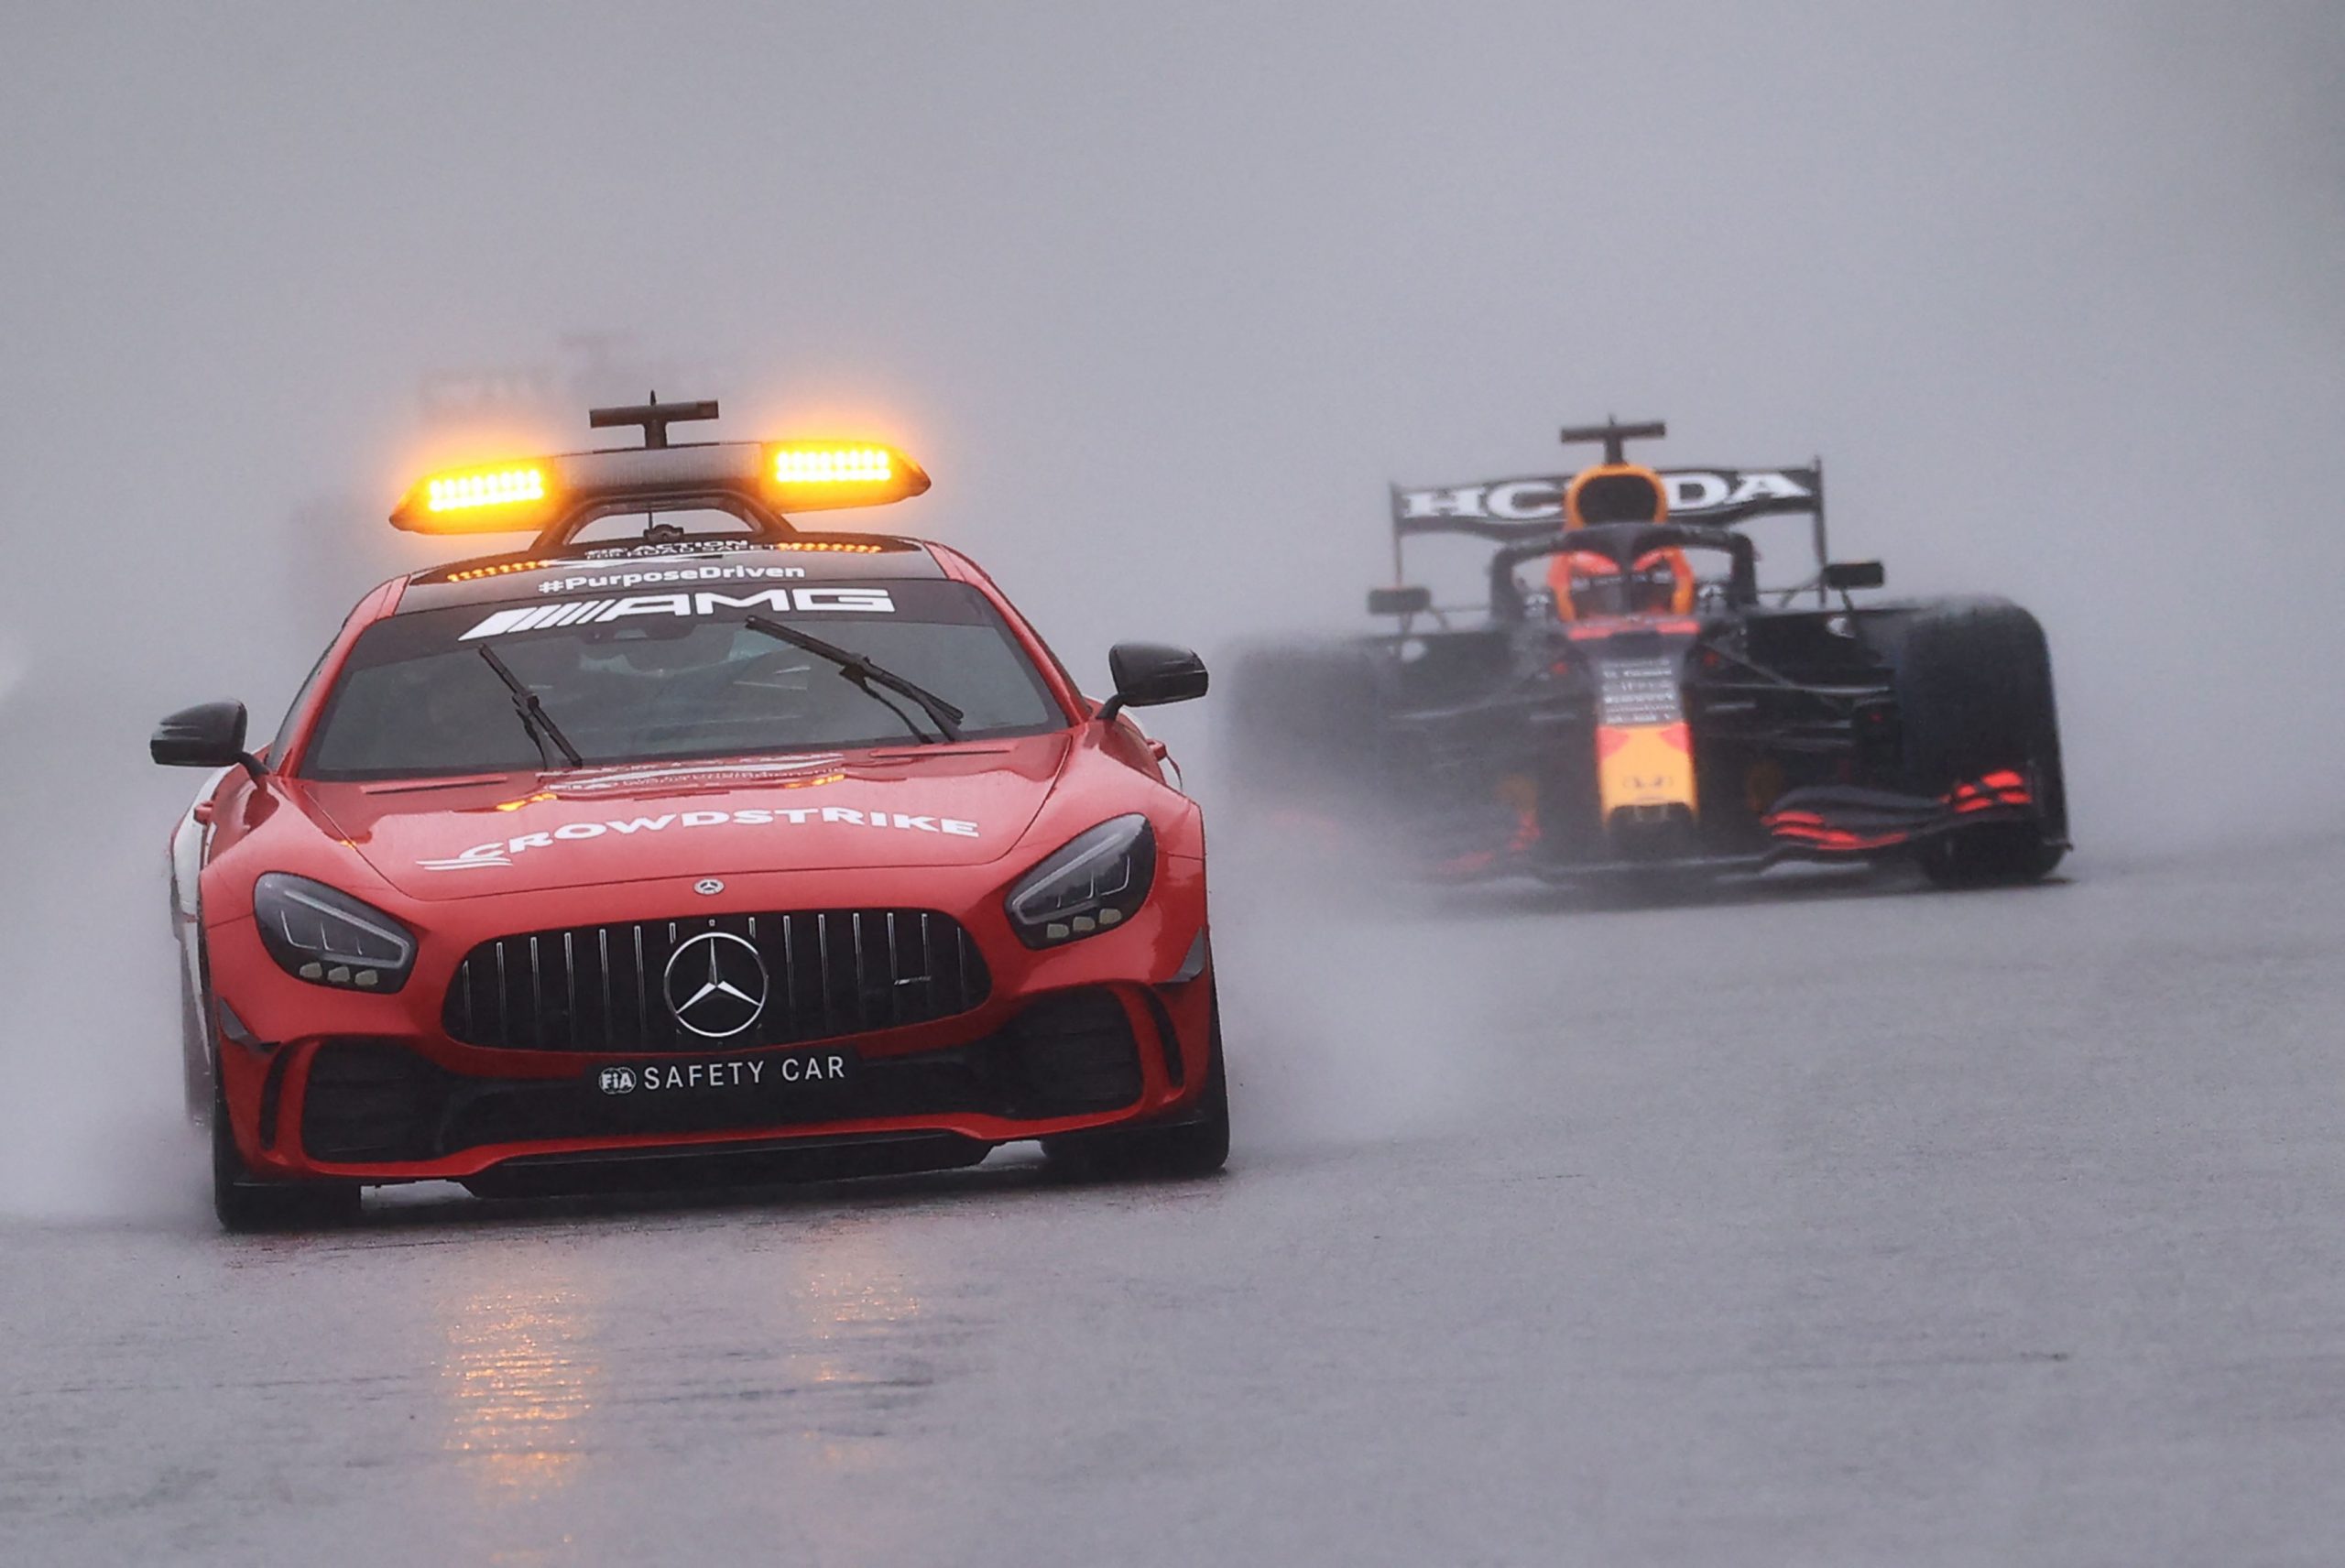 F1比利时站大雨袭击为何不展延？  部分赛道为公路（运营费）为主因